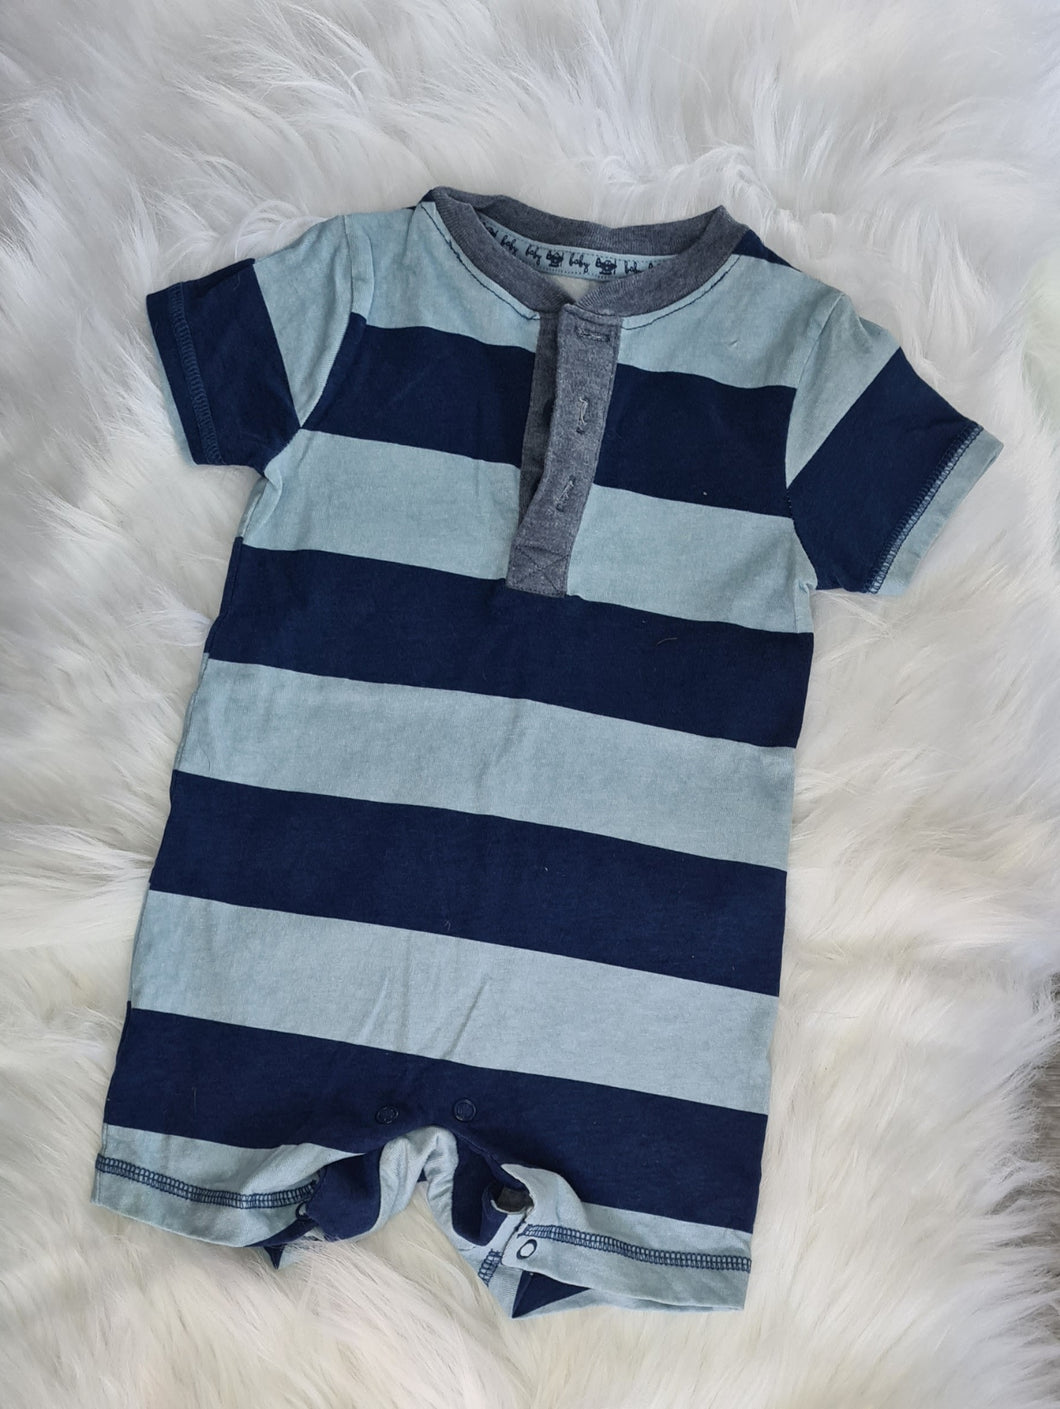 Boys 3-6 Months - Blue & Navy Stripy Romper